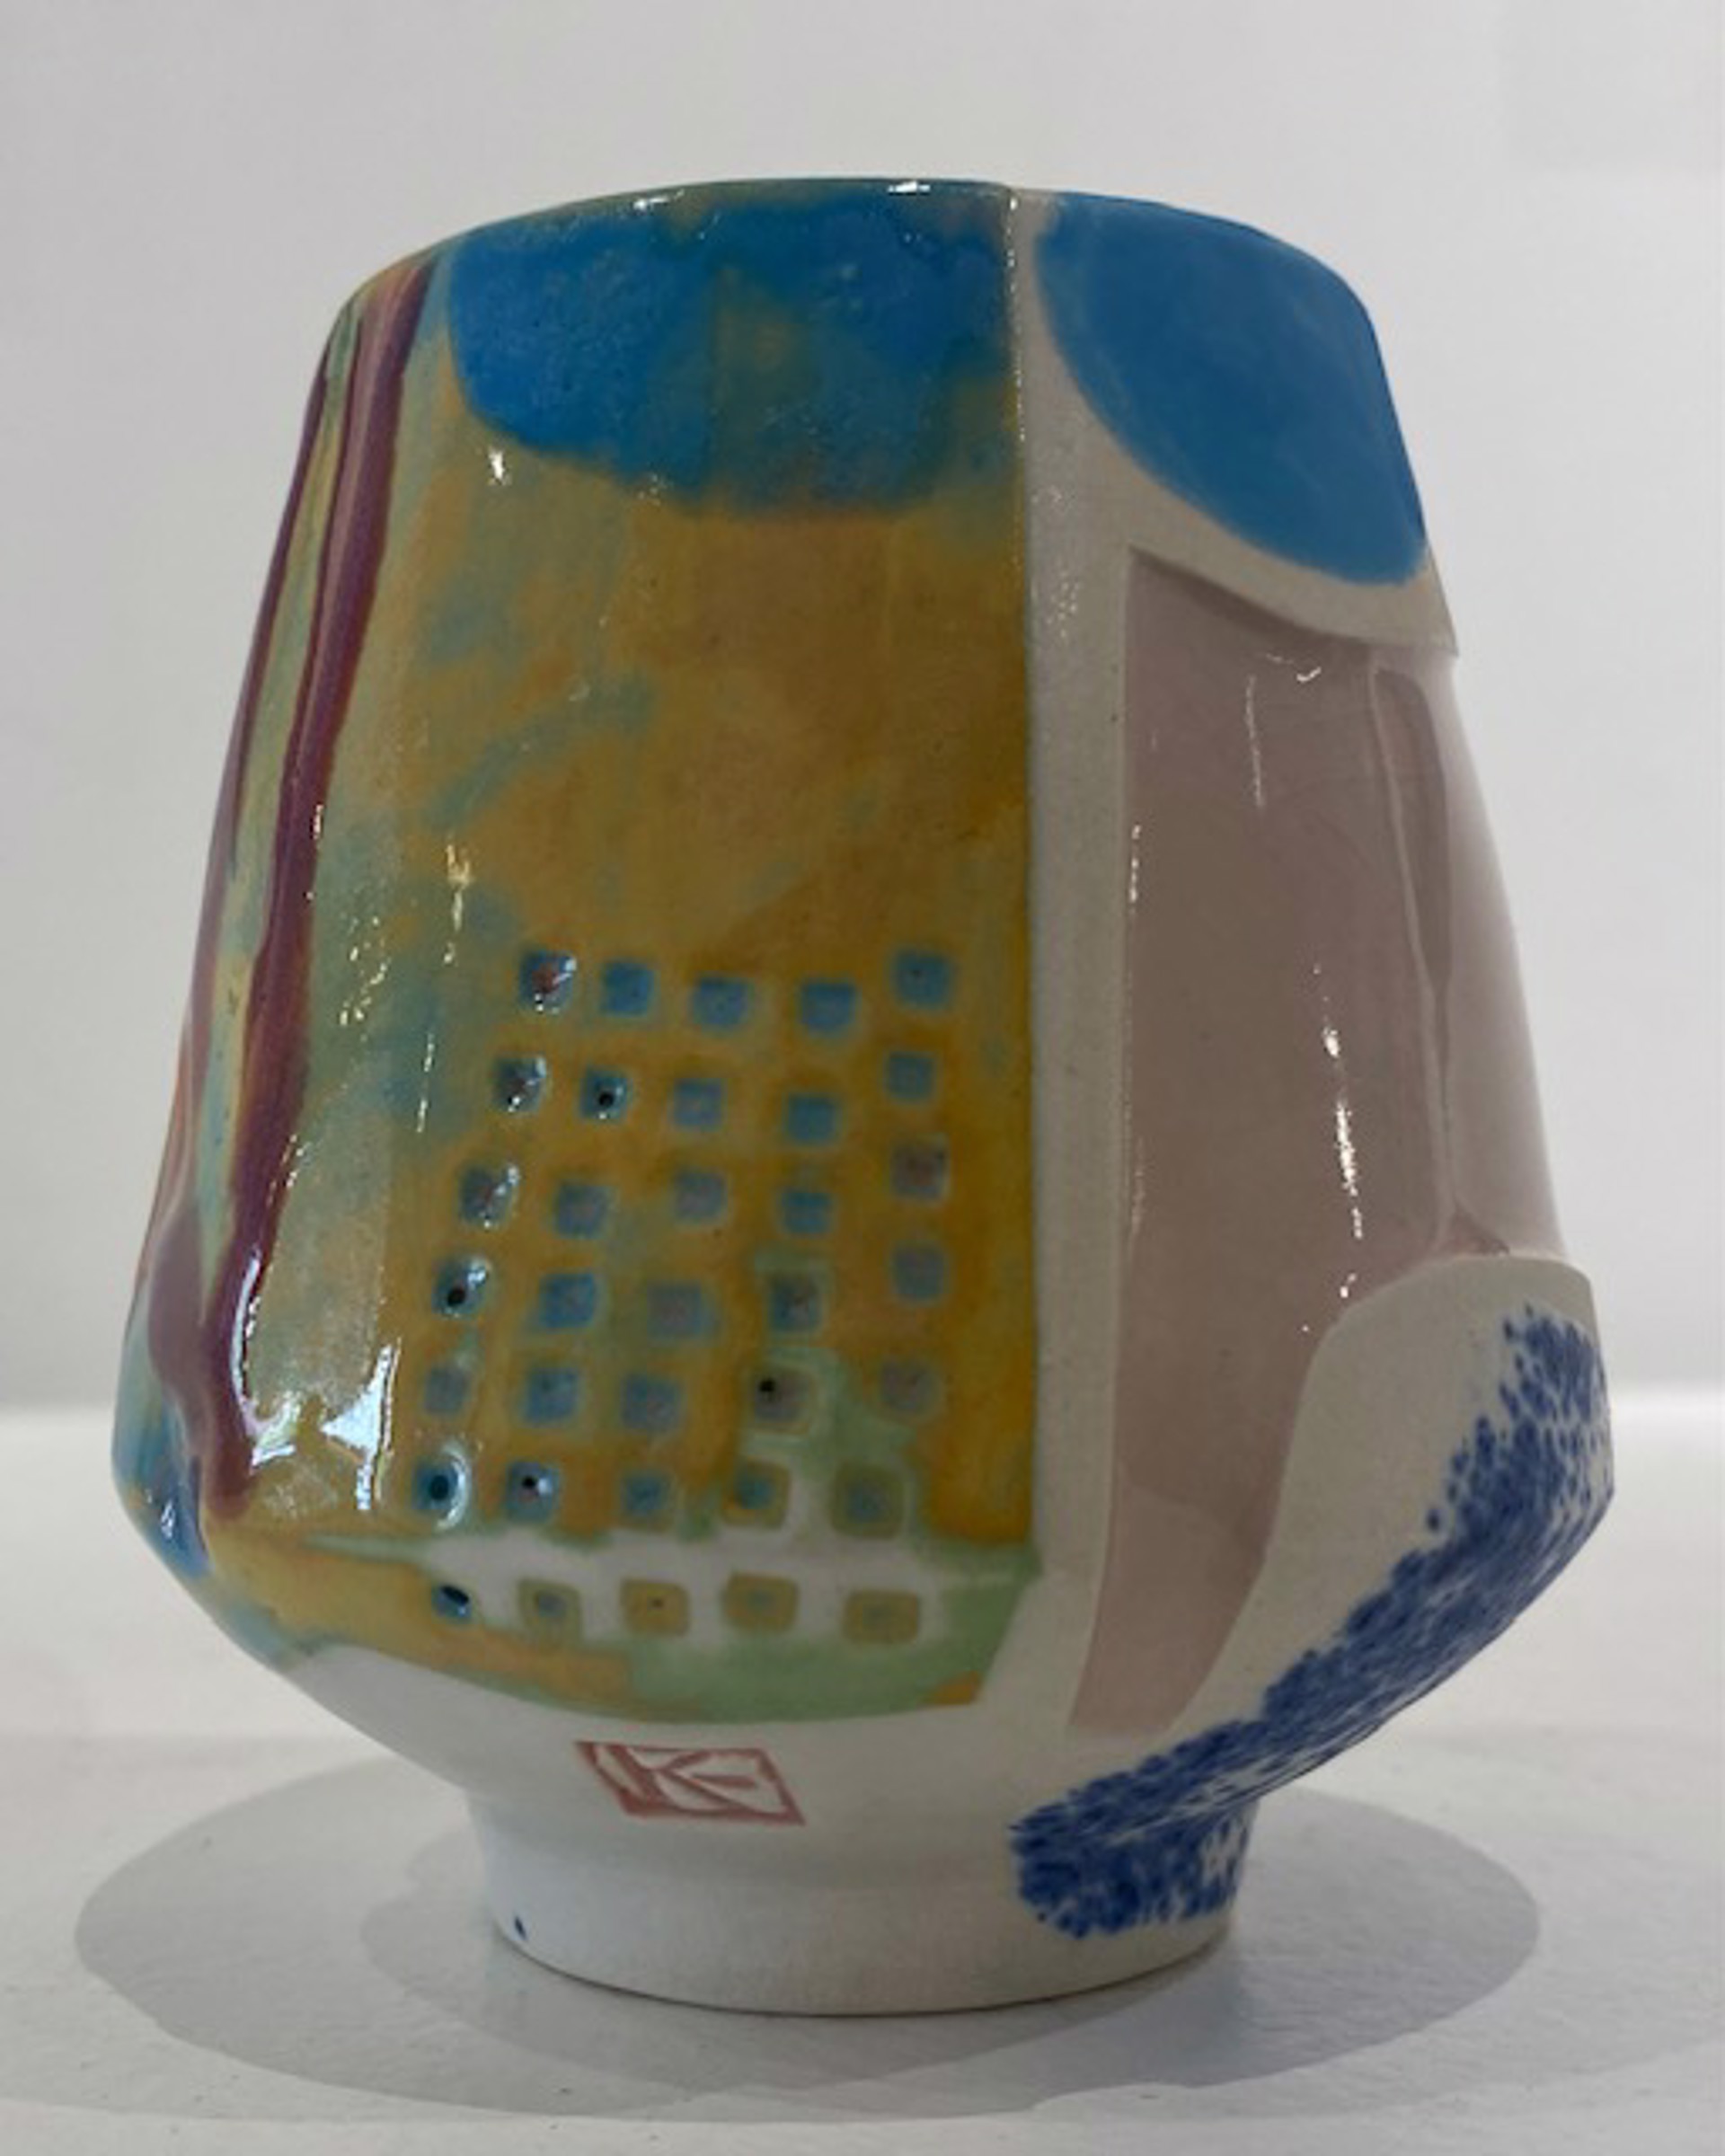 Yunomi Tea Cup (various colors) by Steve Kelly